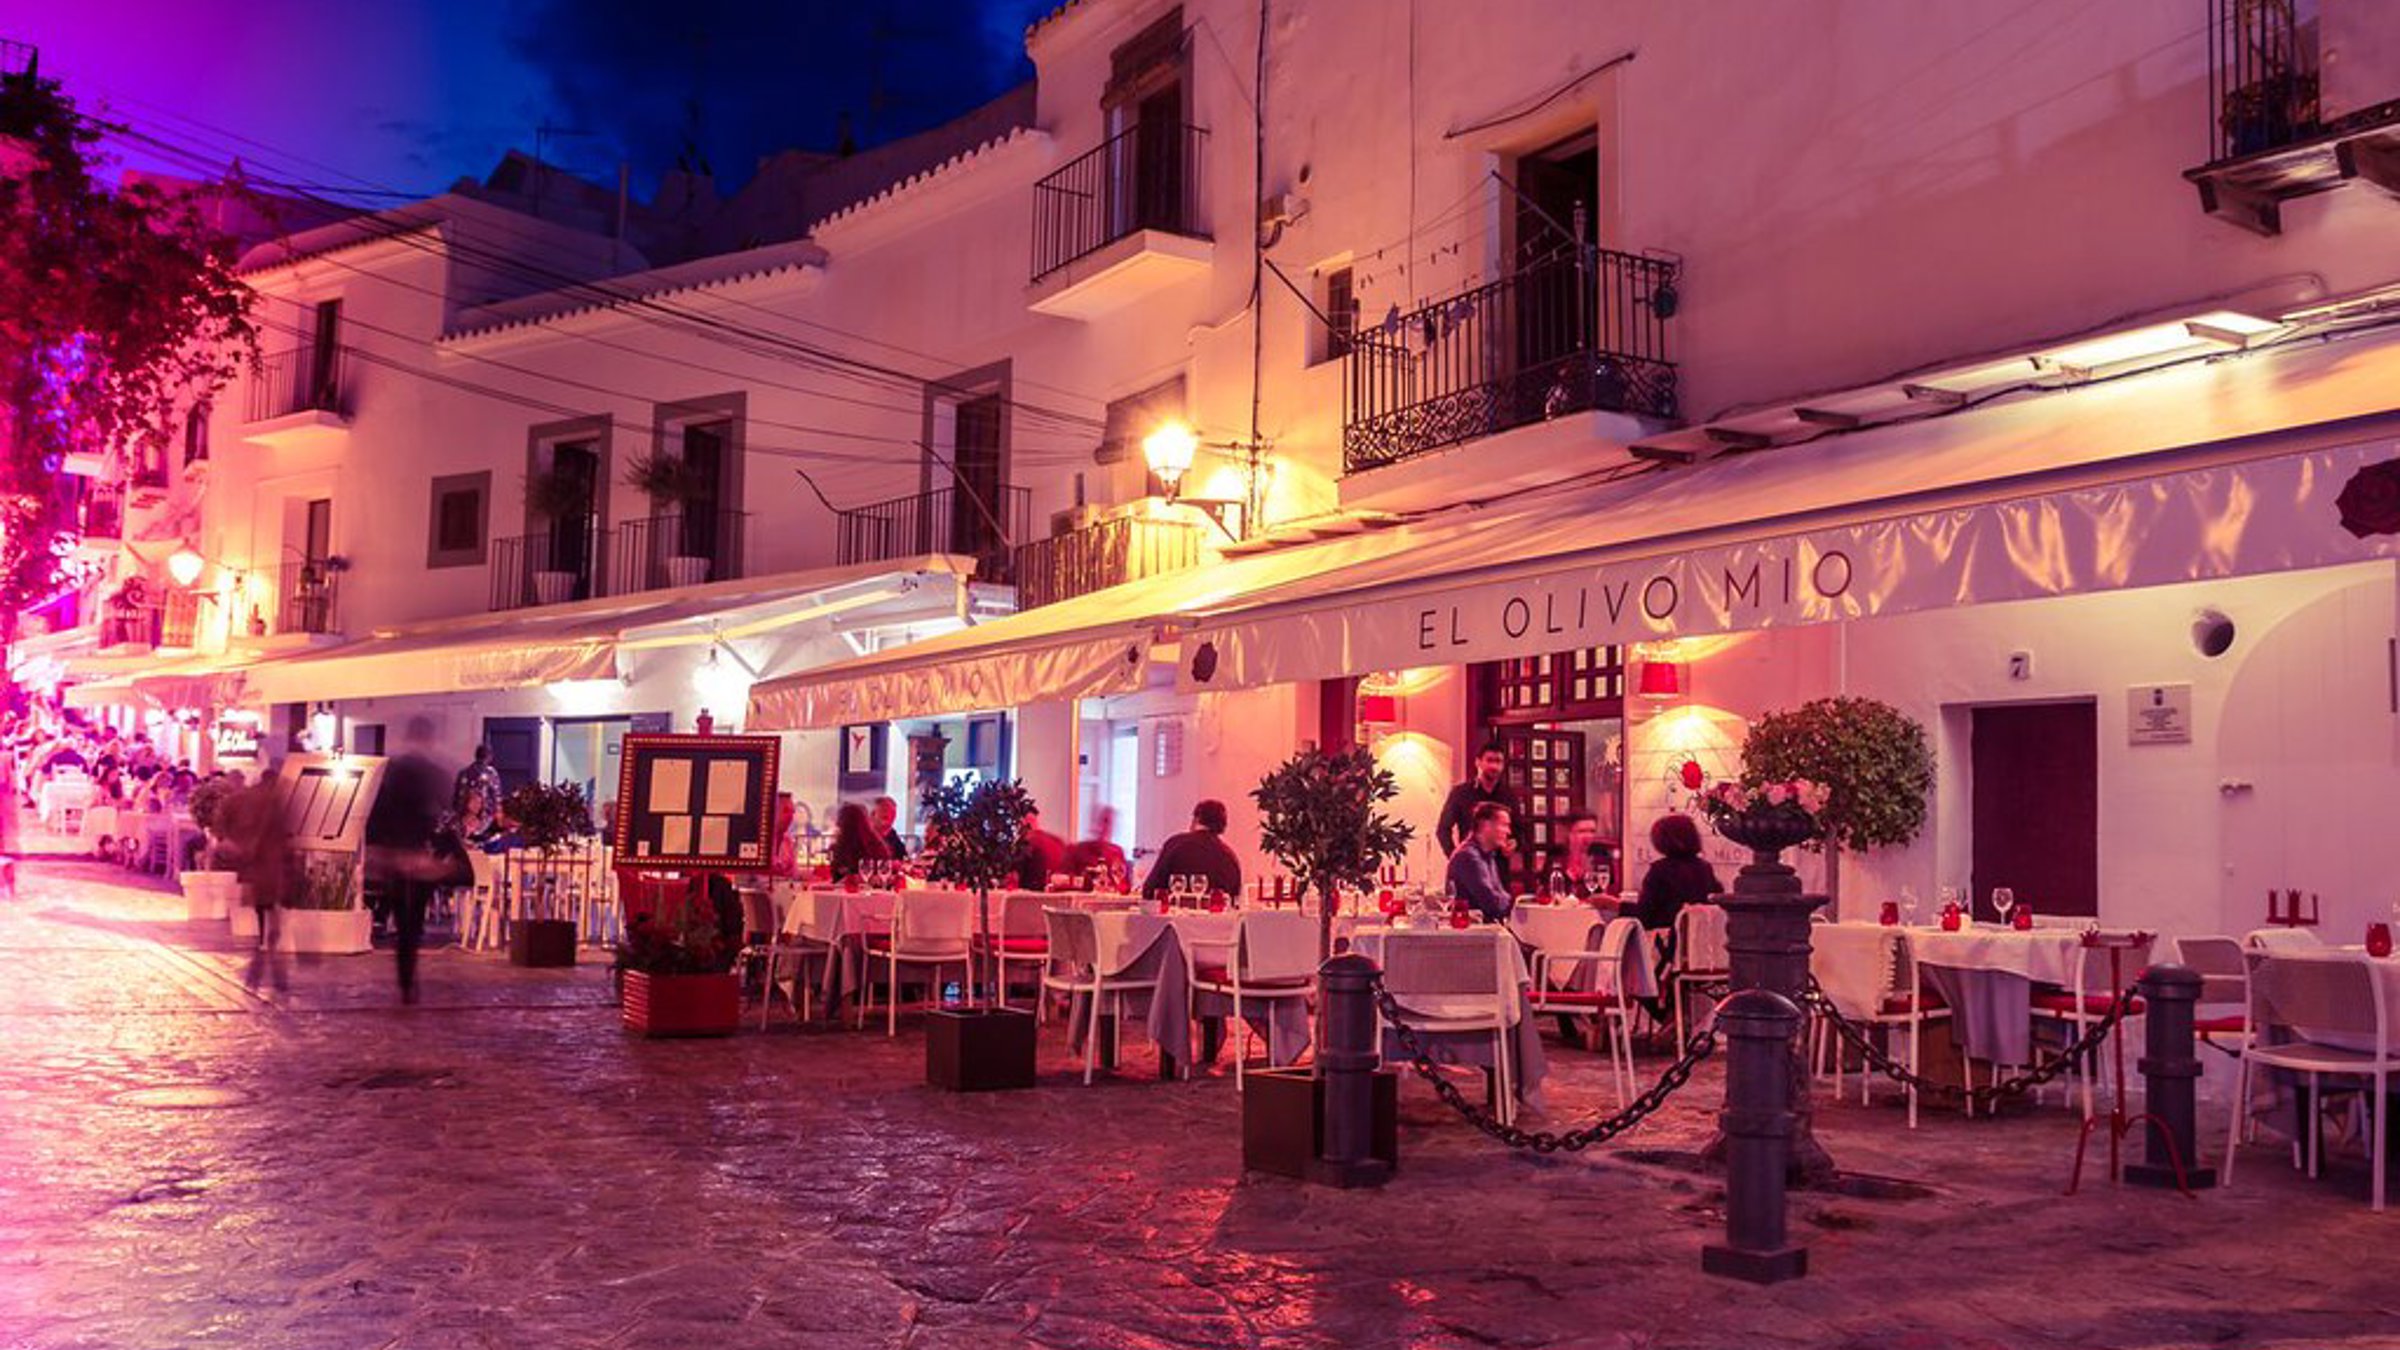 La Dispensa, romantic fine dining in an iconic Ibizan setting.